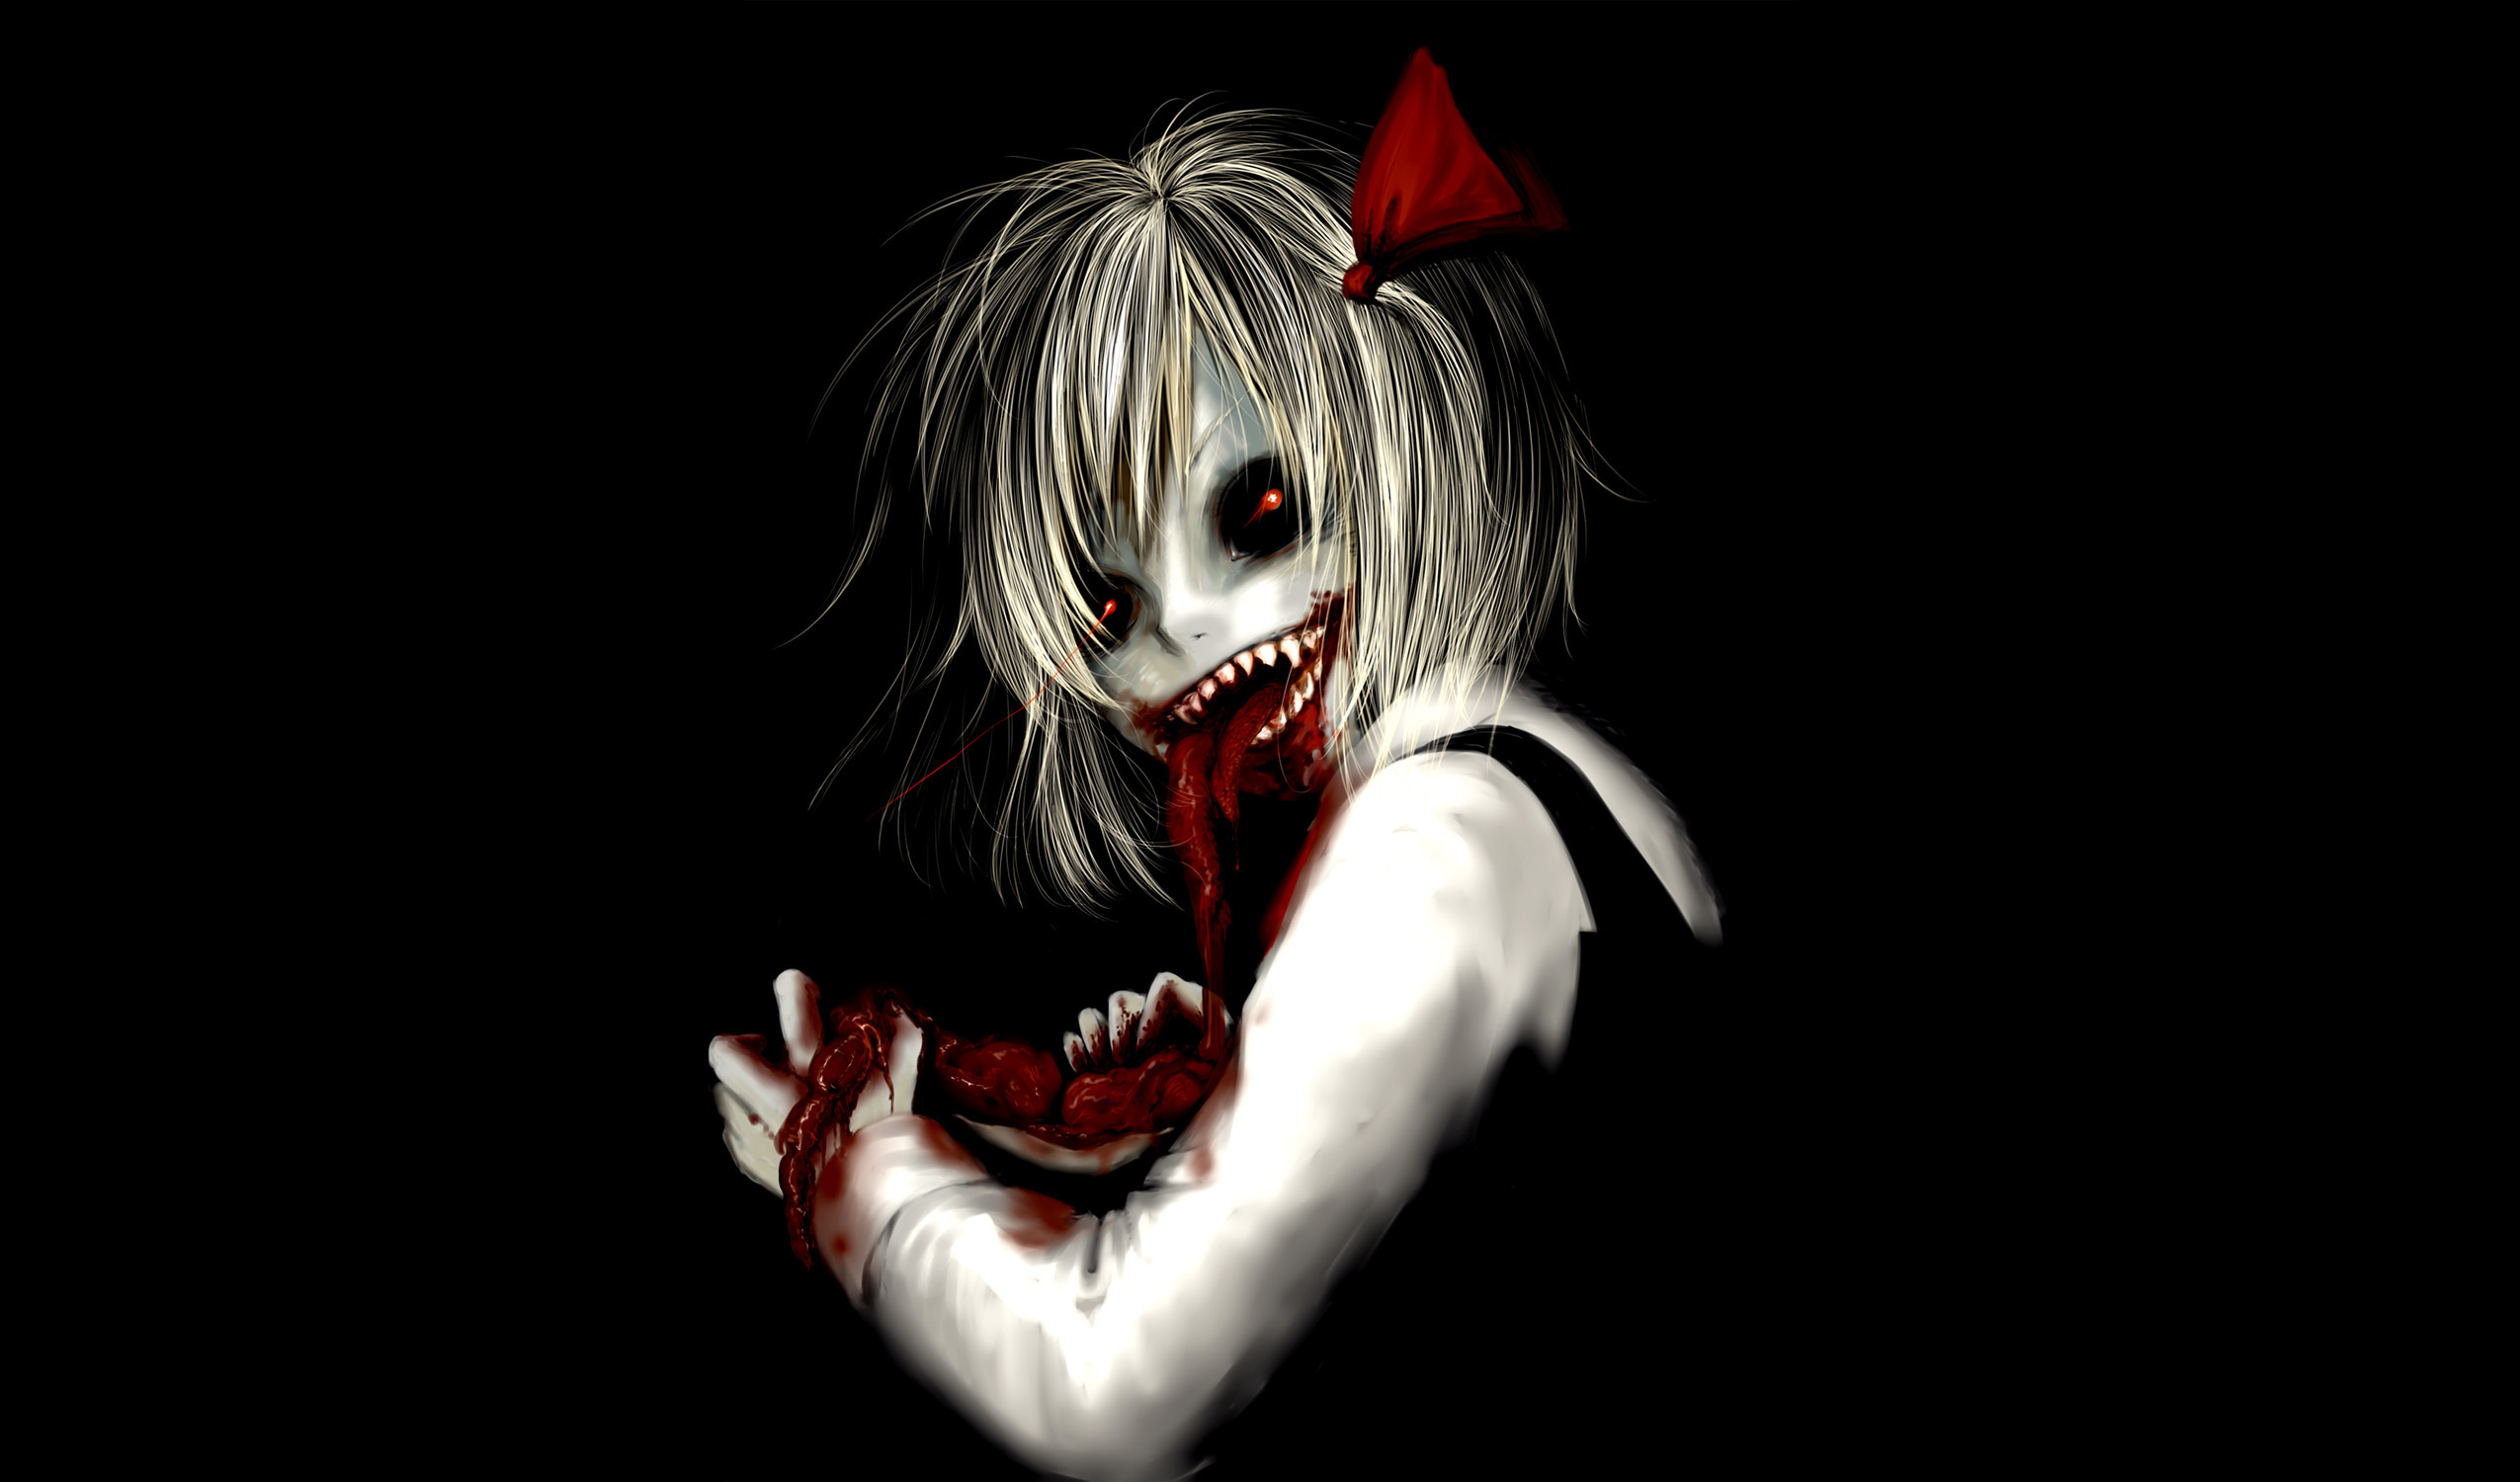 Dark horror anime macabre blood guts evil girl wallpaper 2550x1500